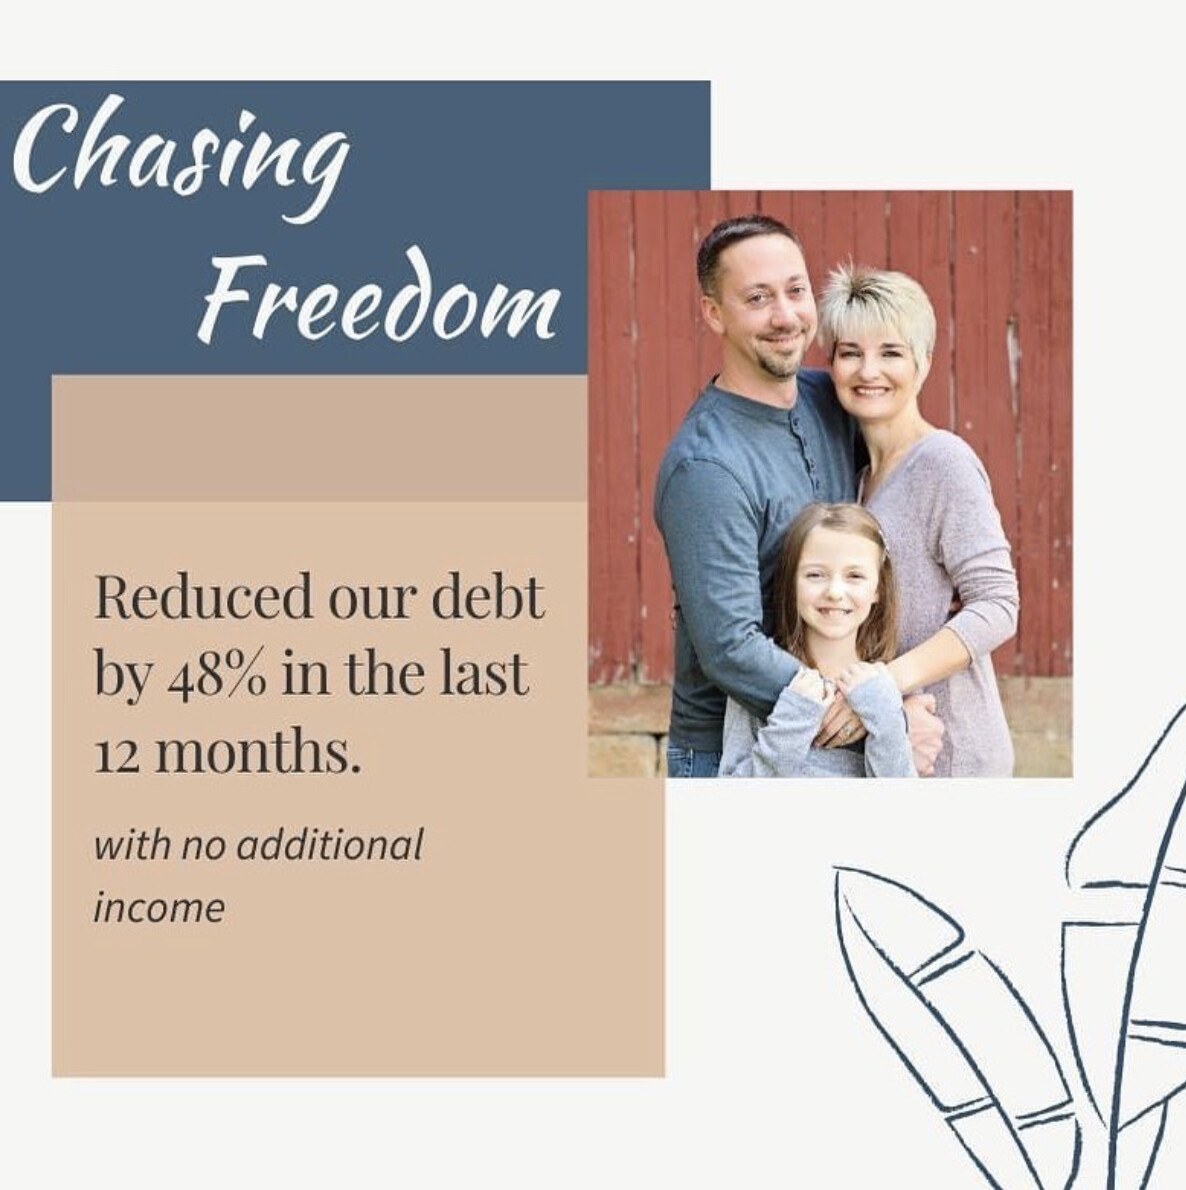 Chasing Financial Freedom